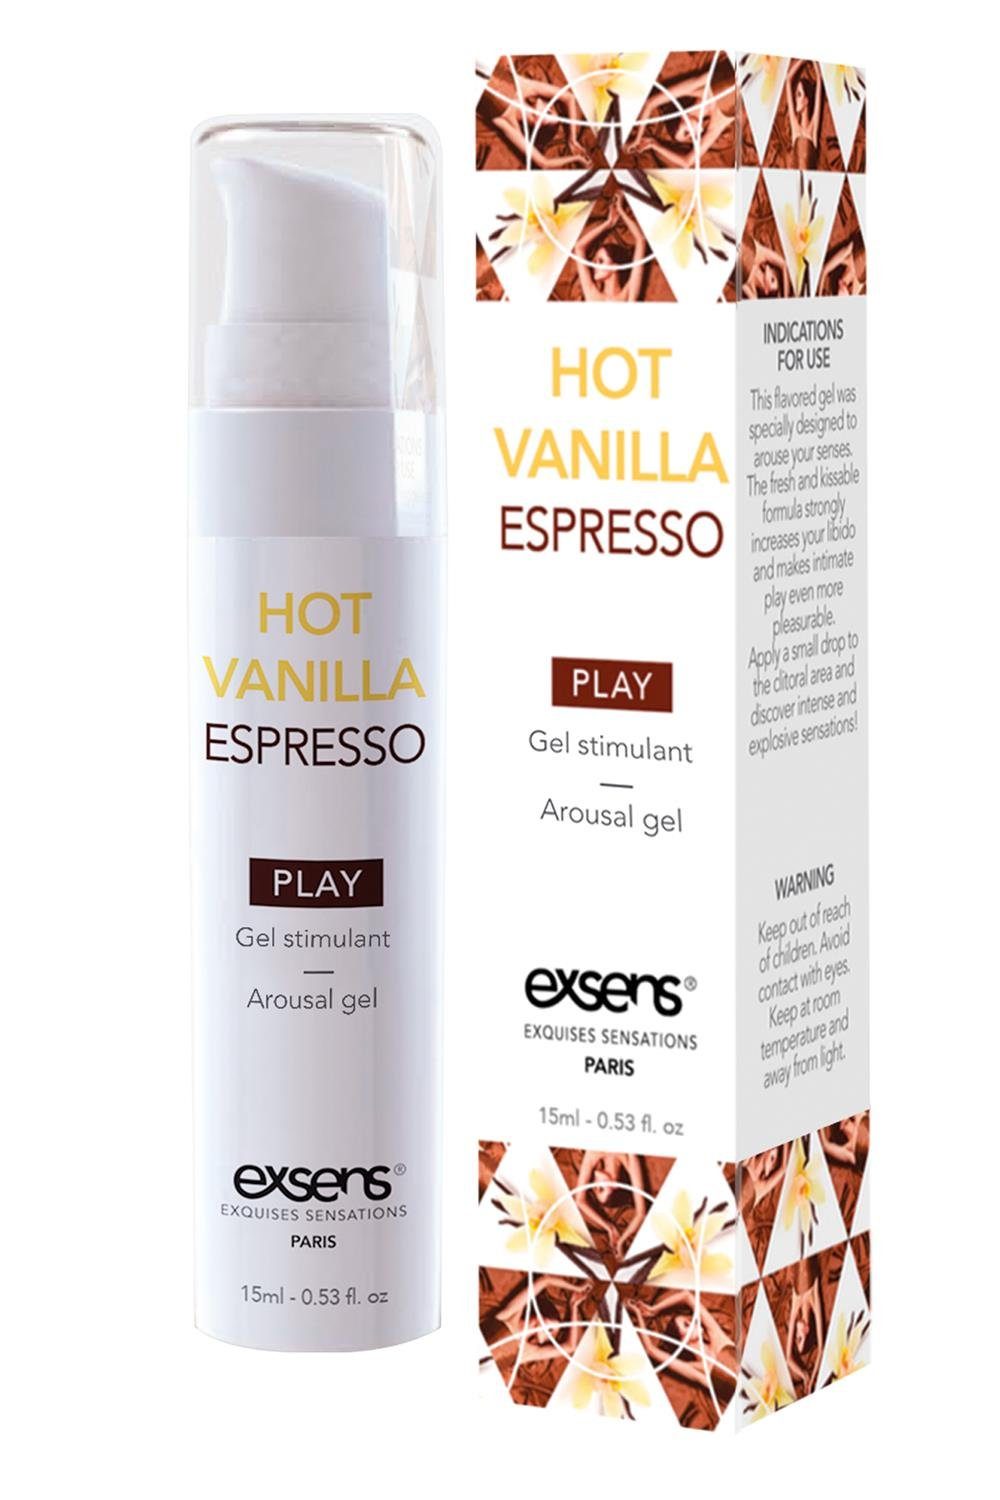 Massagegel Hot Exsens Kühleffekt Gel Gleit- sofortiger und Espresso Fast Arousal 15ml, Vanilla Exsens